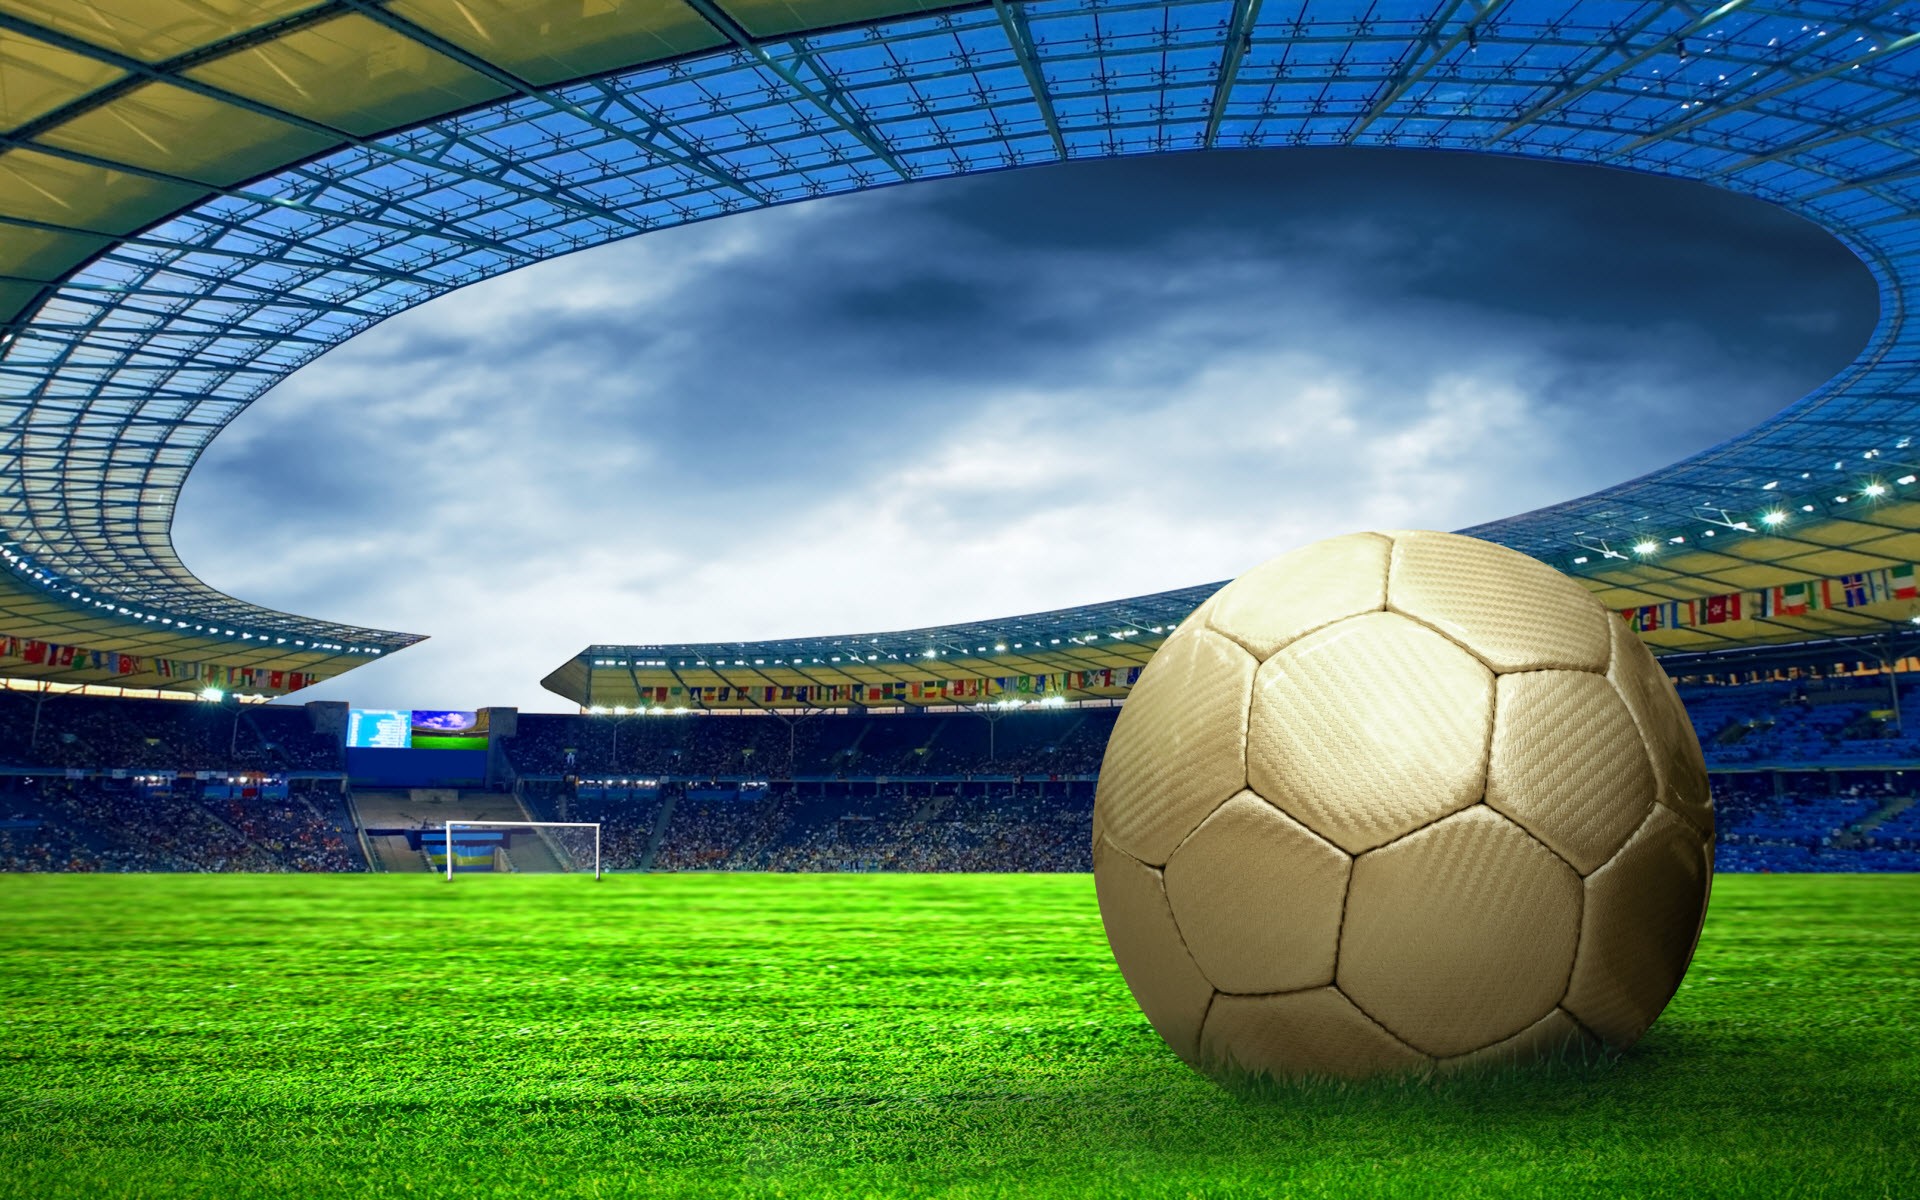 fond d'écran futebol,football,ballon de football,stade spécifique au football,stade,atmosphère